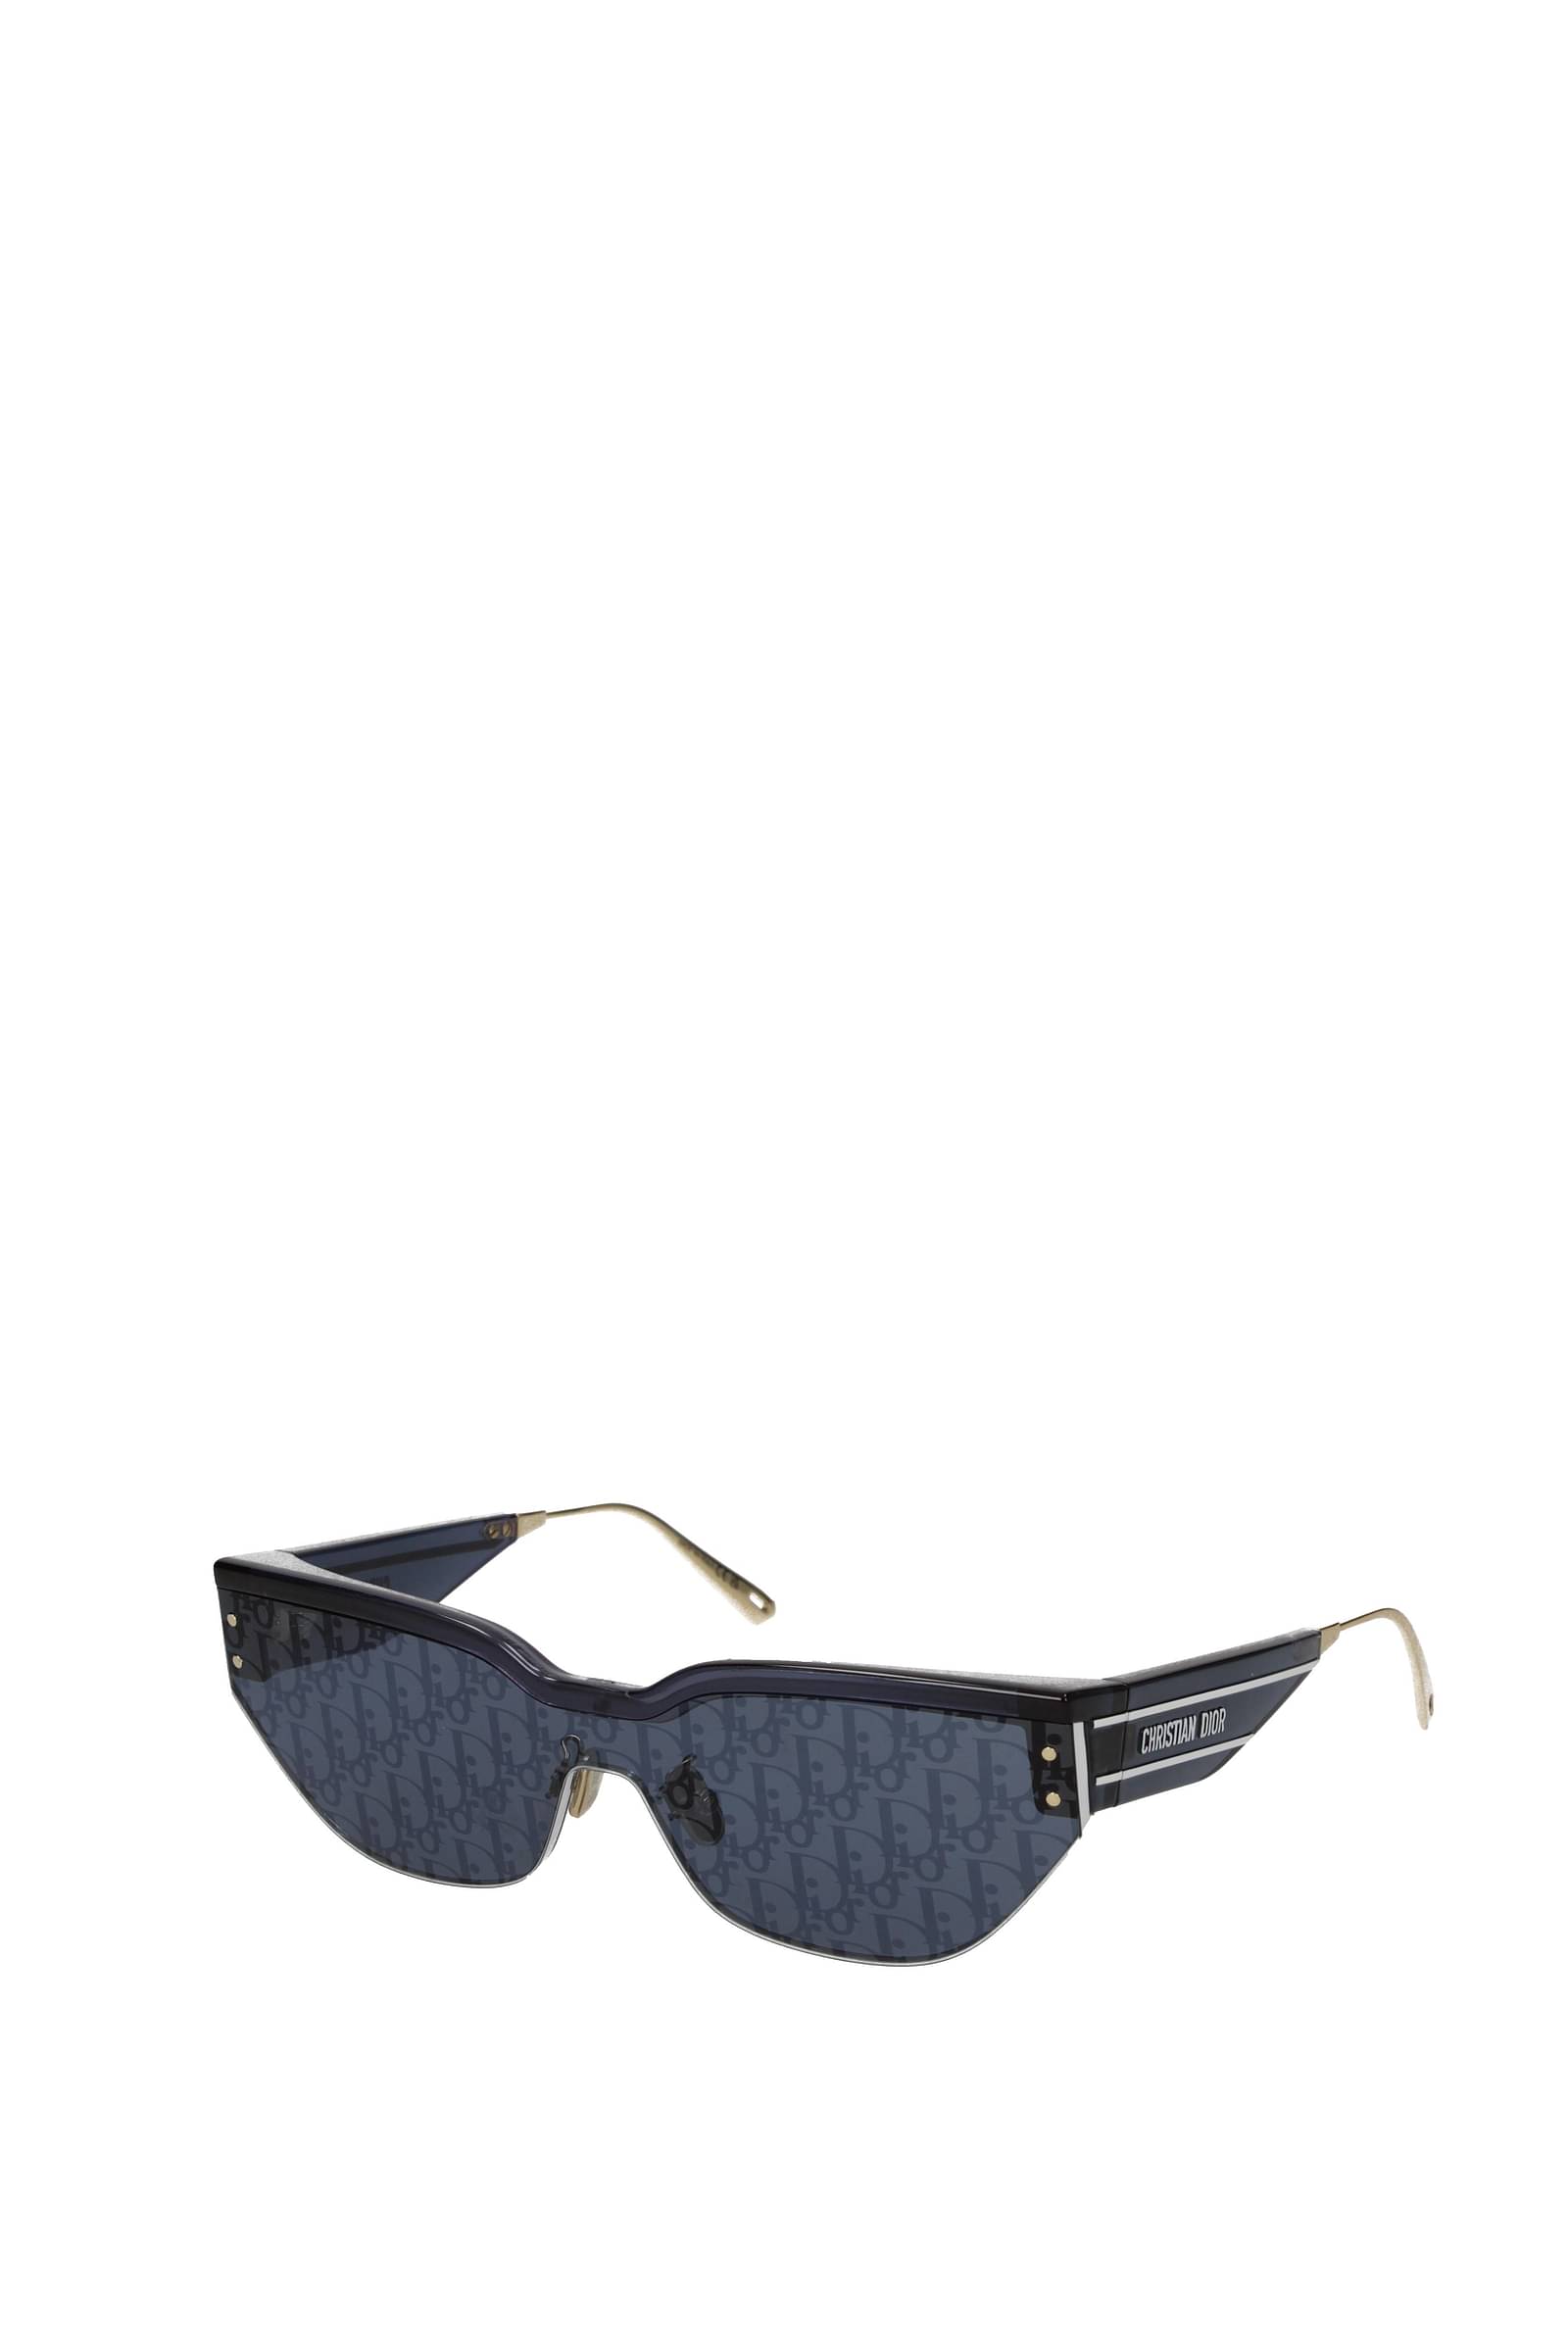 Christian Dior Addict 1 Sunglasses Rose Gold Havana Blue 000A9 Women  Shield New  eBay